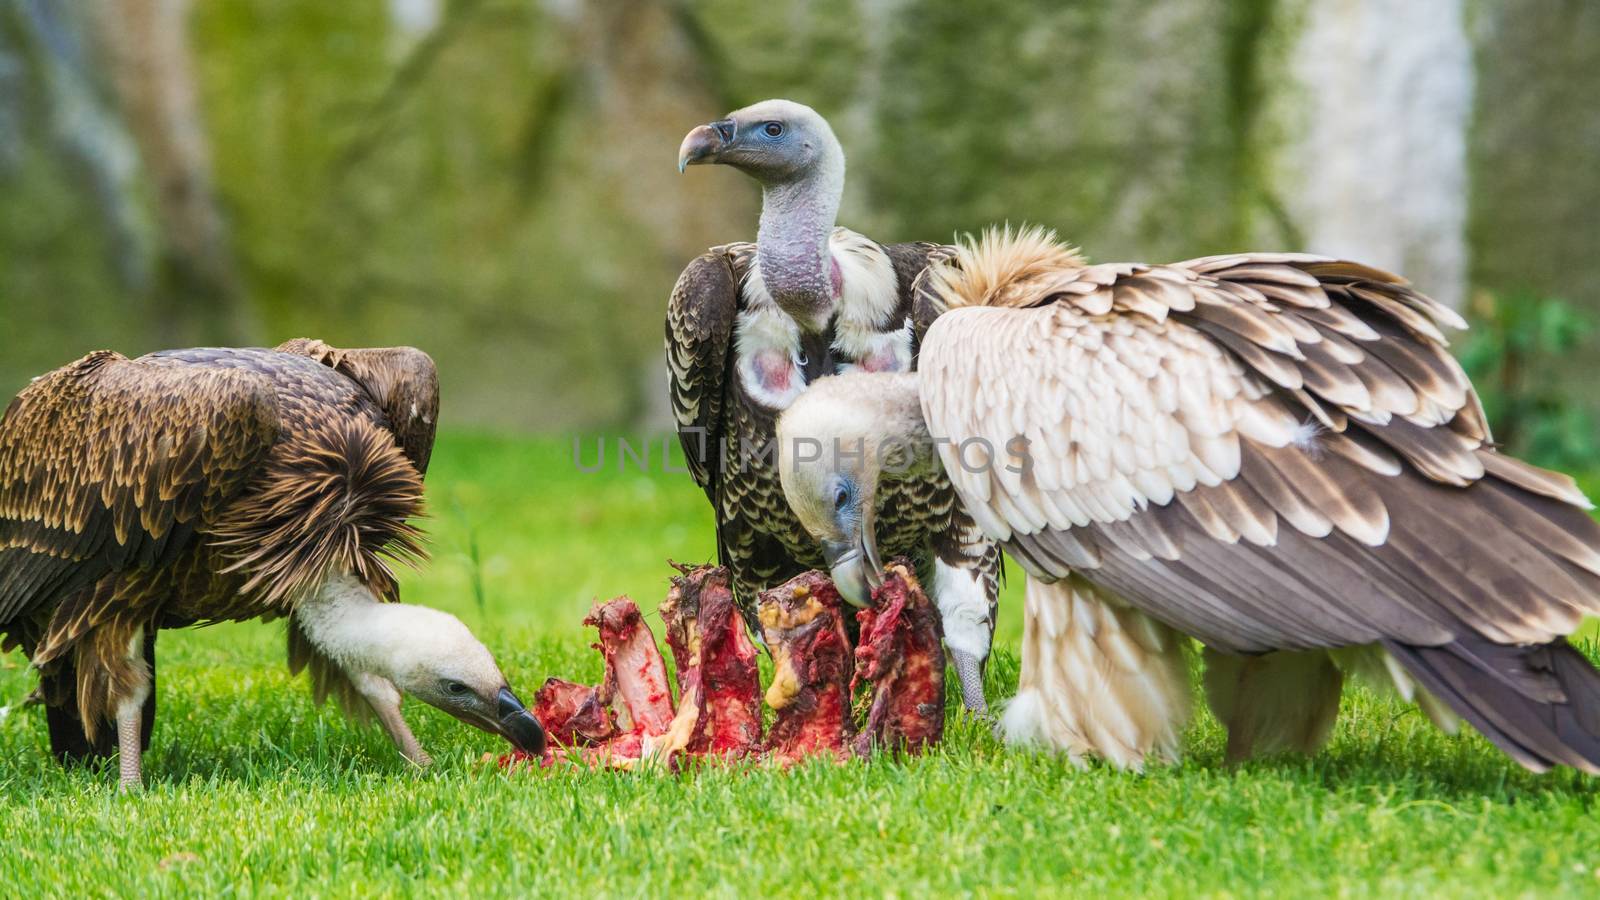 European griffon vultures by nickfox